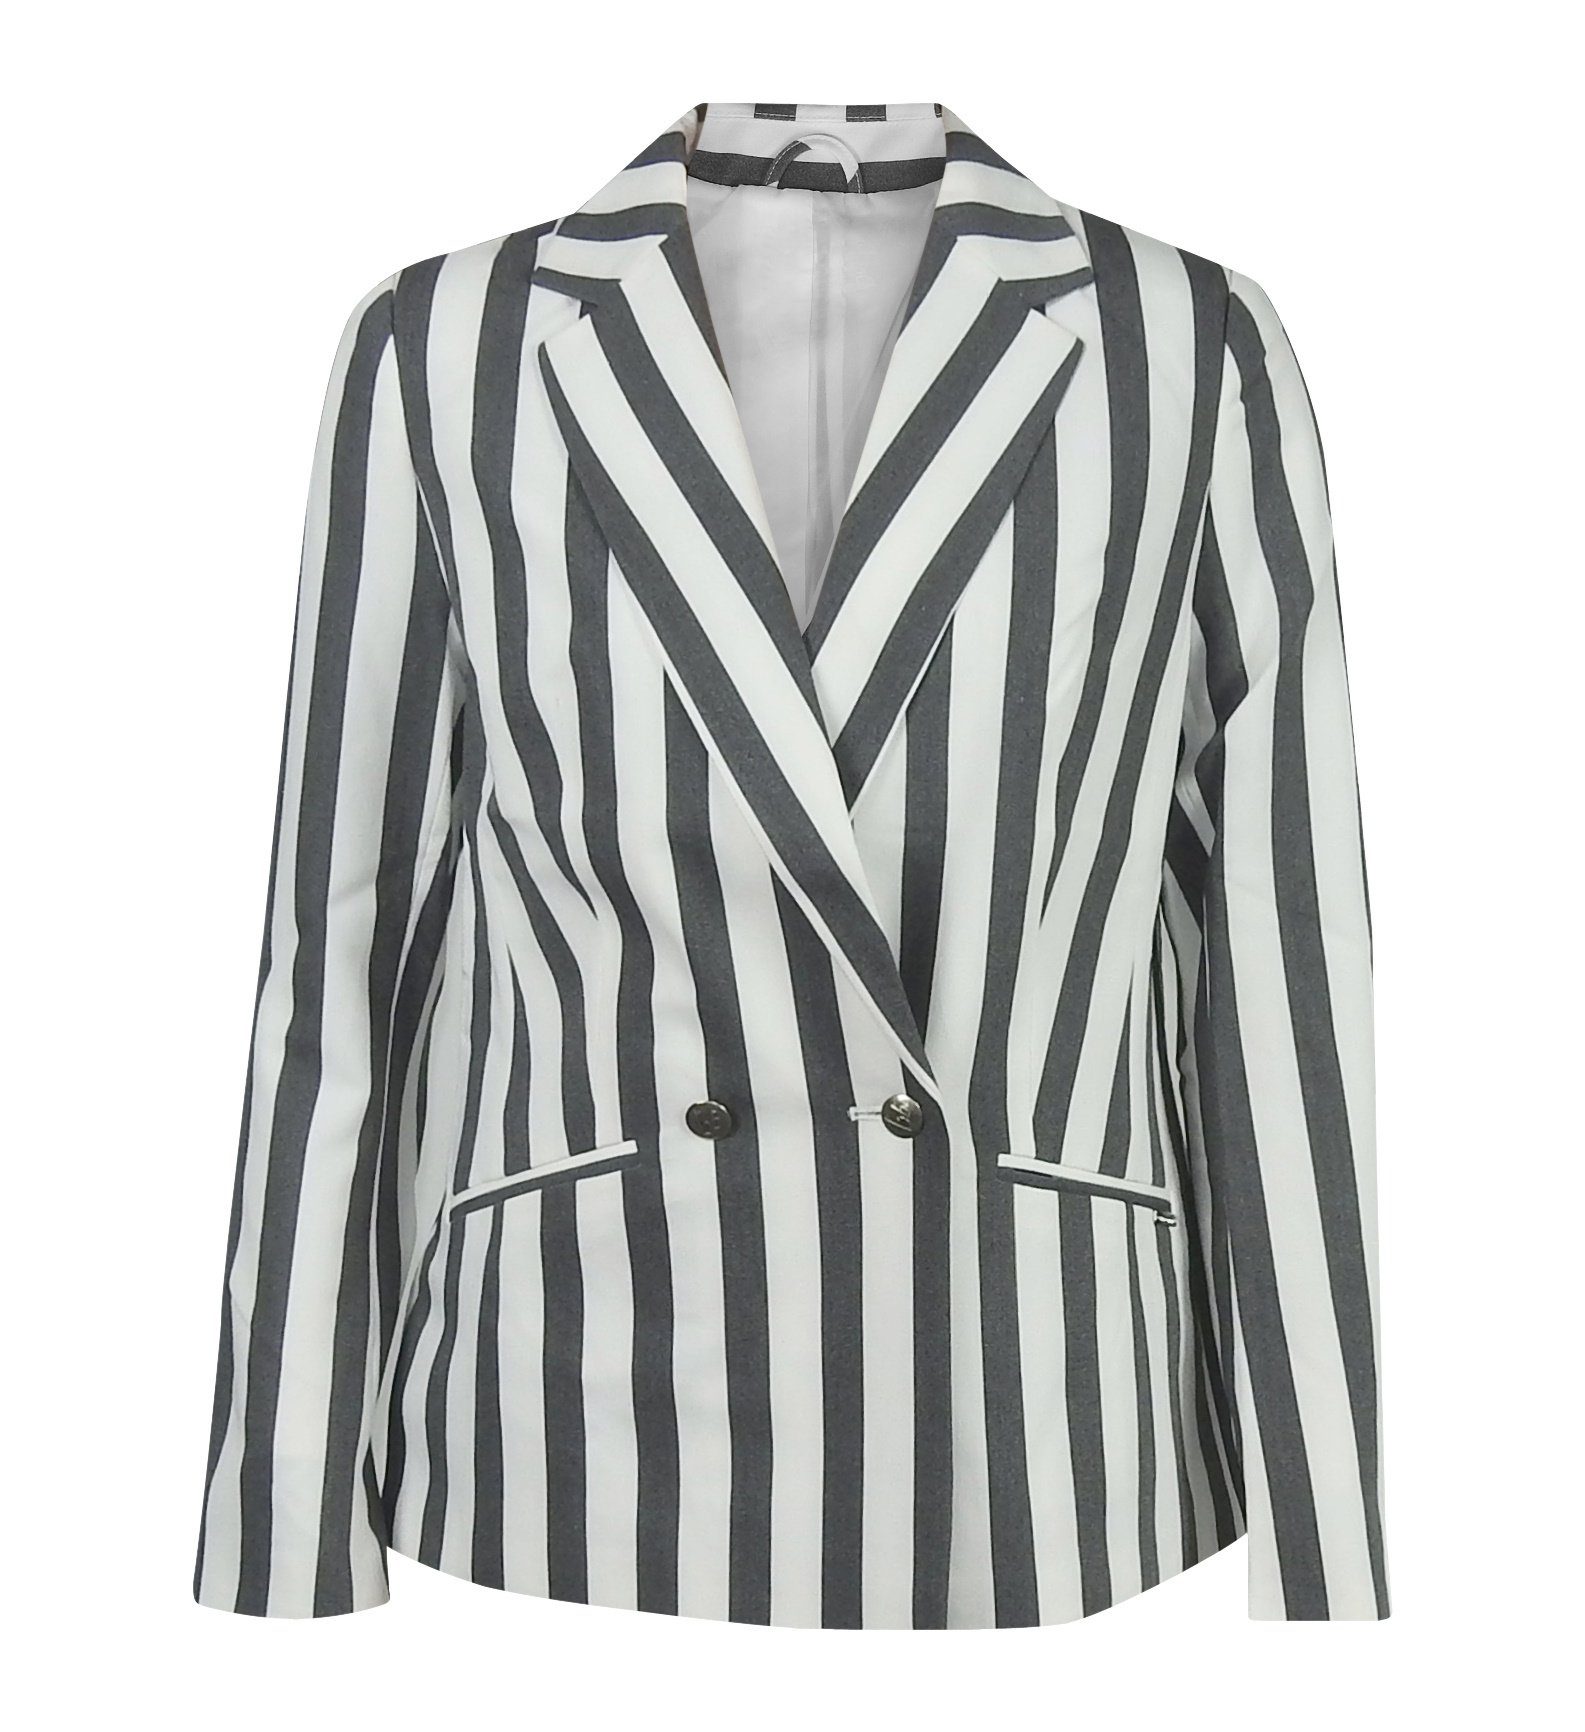 dynamic24 Jackenblazer Damen Blazer gestreift weiss grau Casual Sakko  Business Basic Jacke online kaufen | OTTO